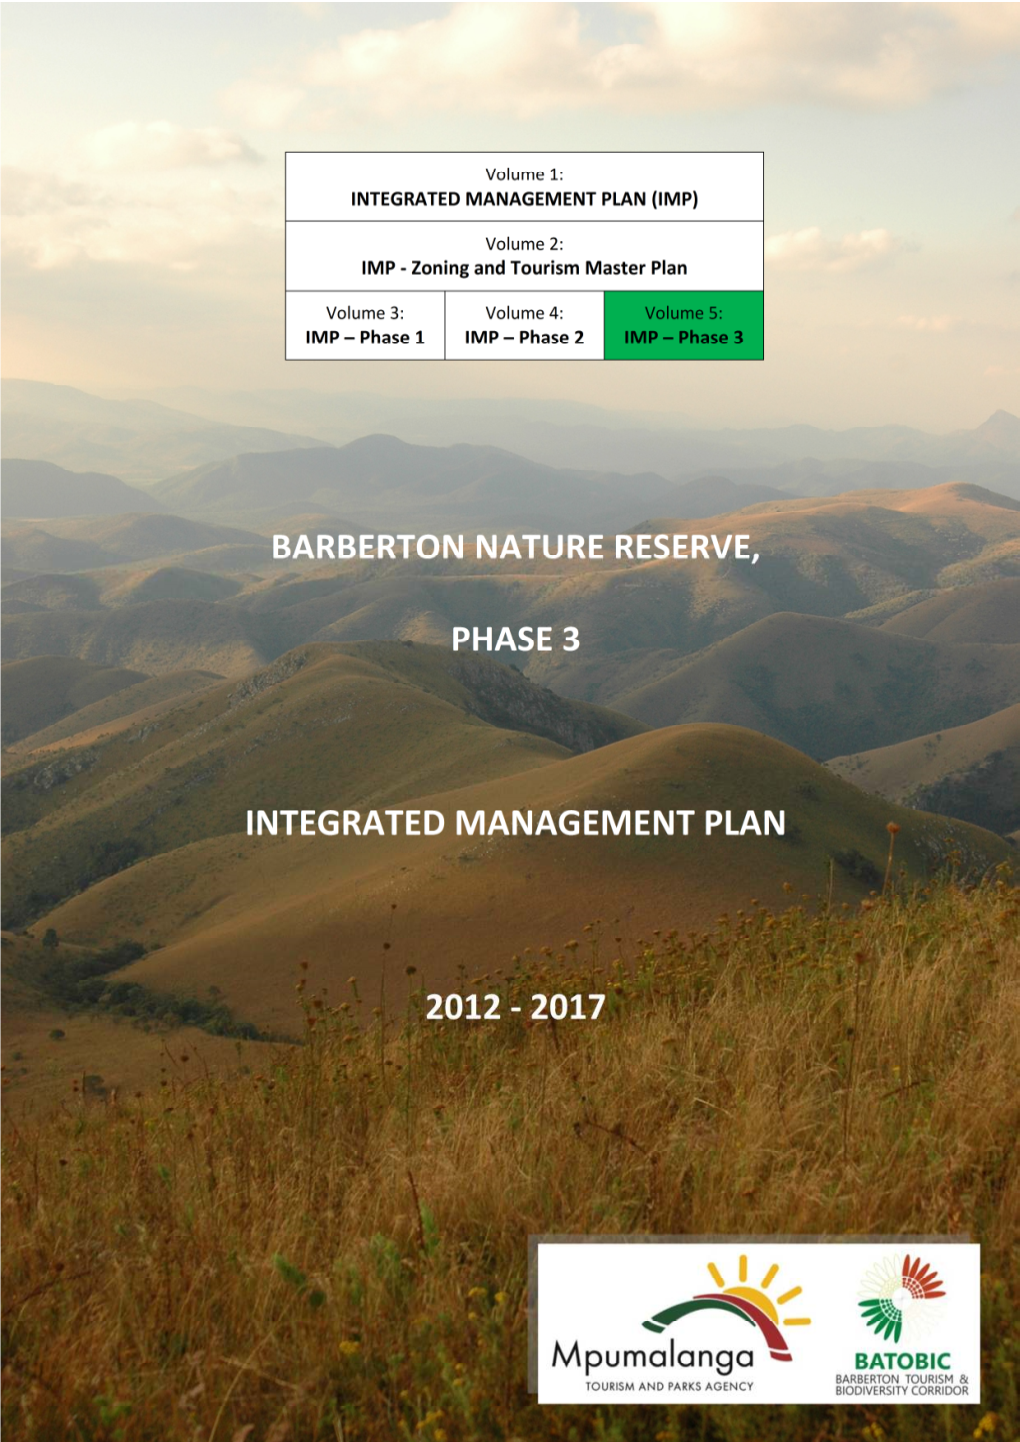 Barberton Nature Reserve: Phase 3, Mpumalanga Province, South Africa